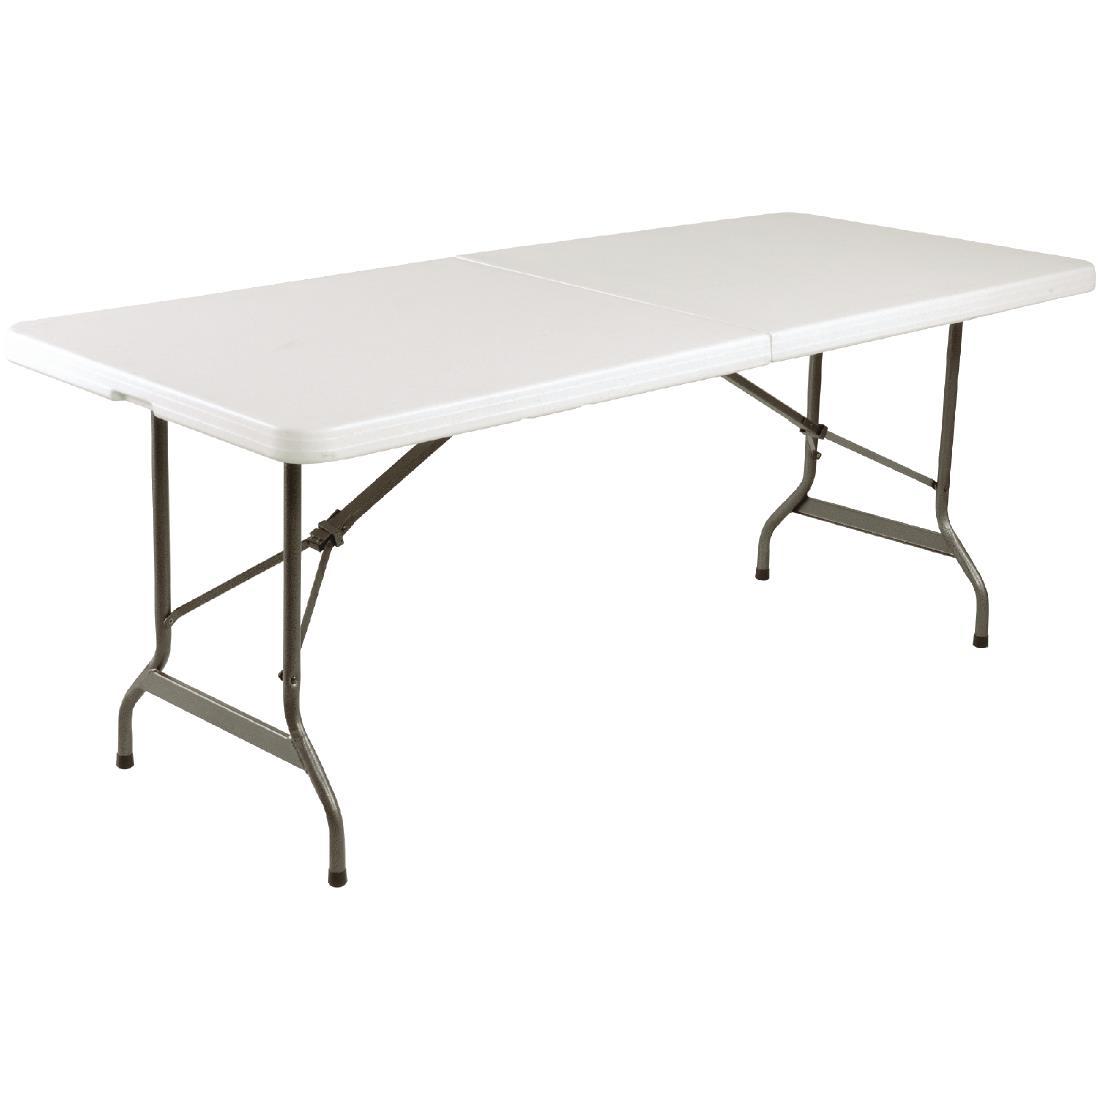 Bolero Rectangular Centre Folding Table 6ft White - L001  - 1